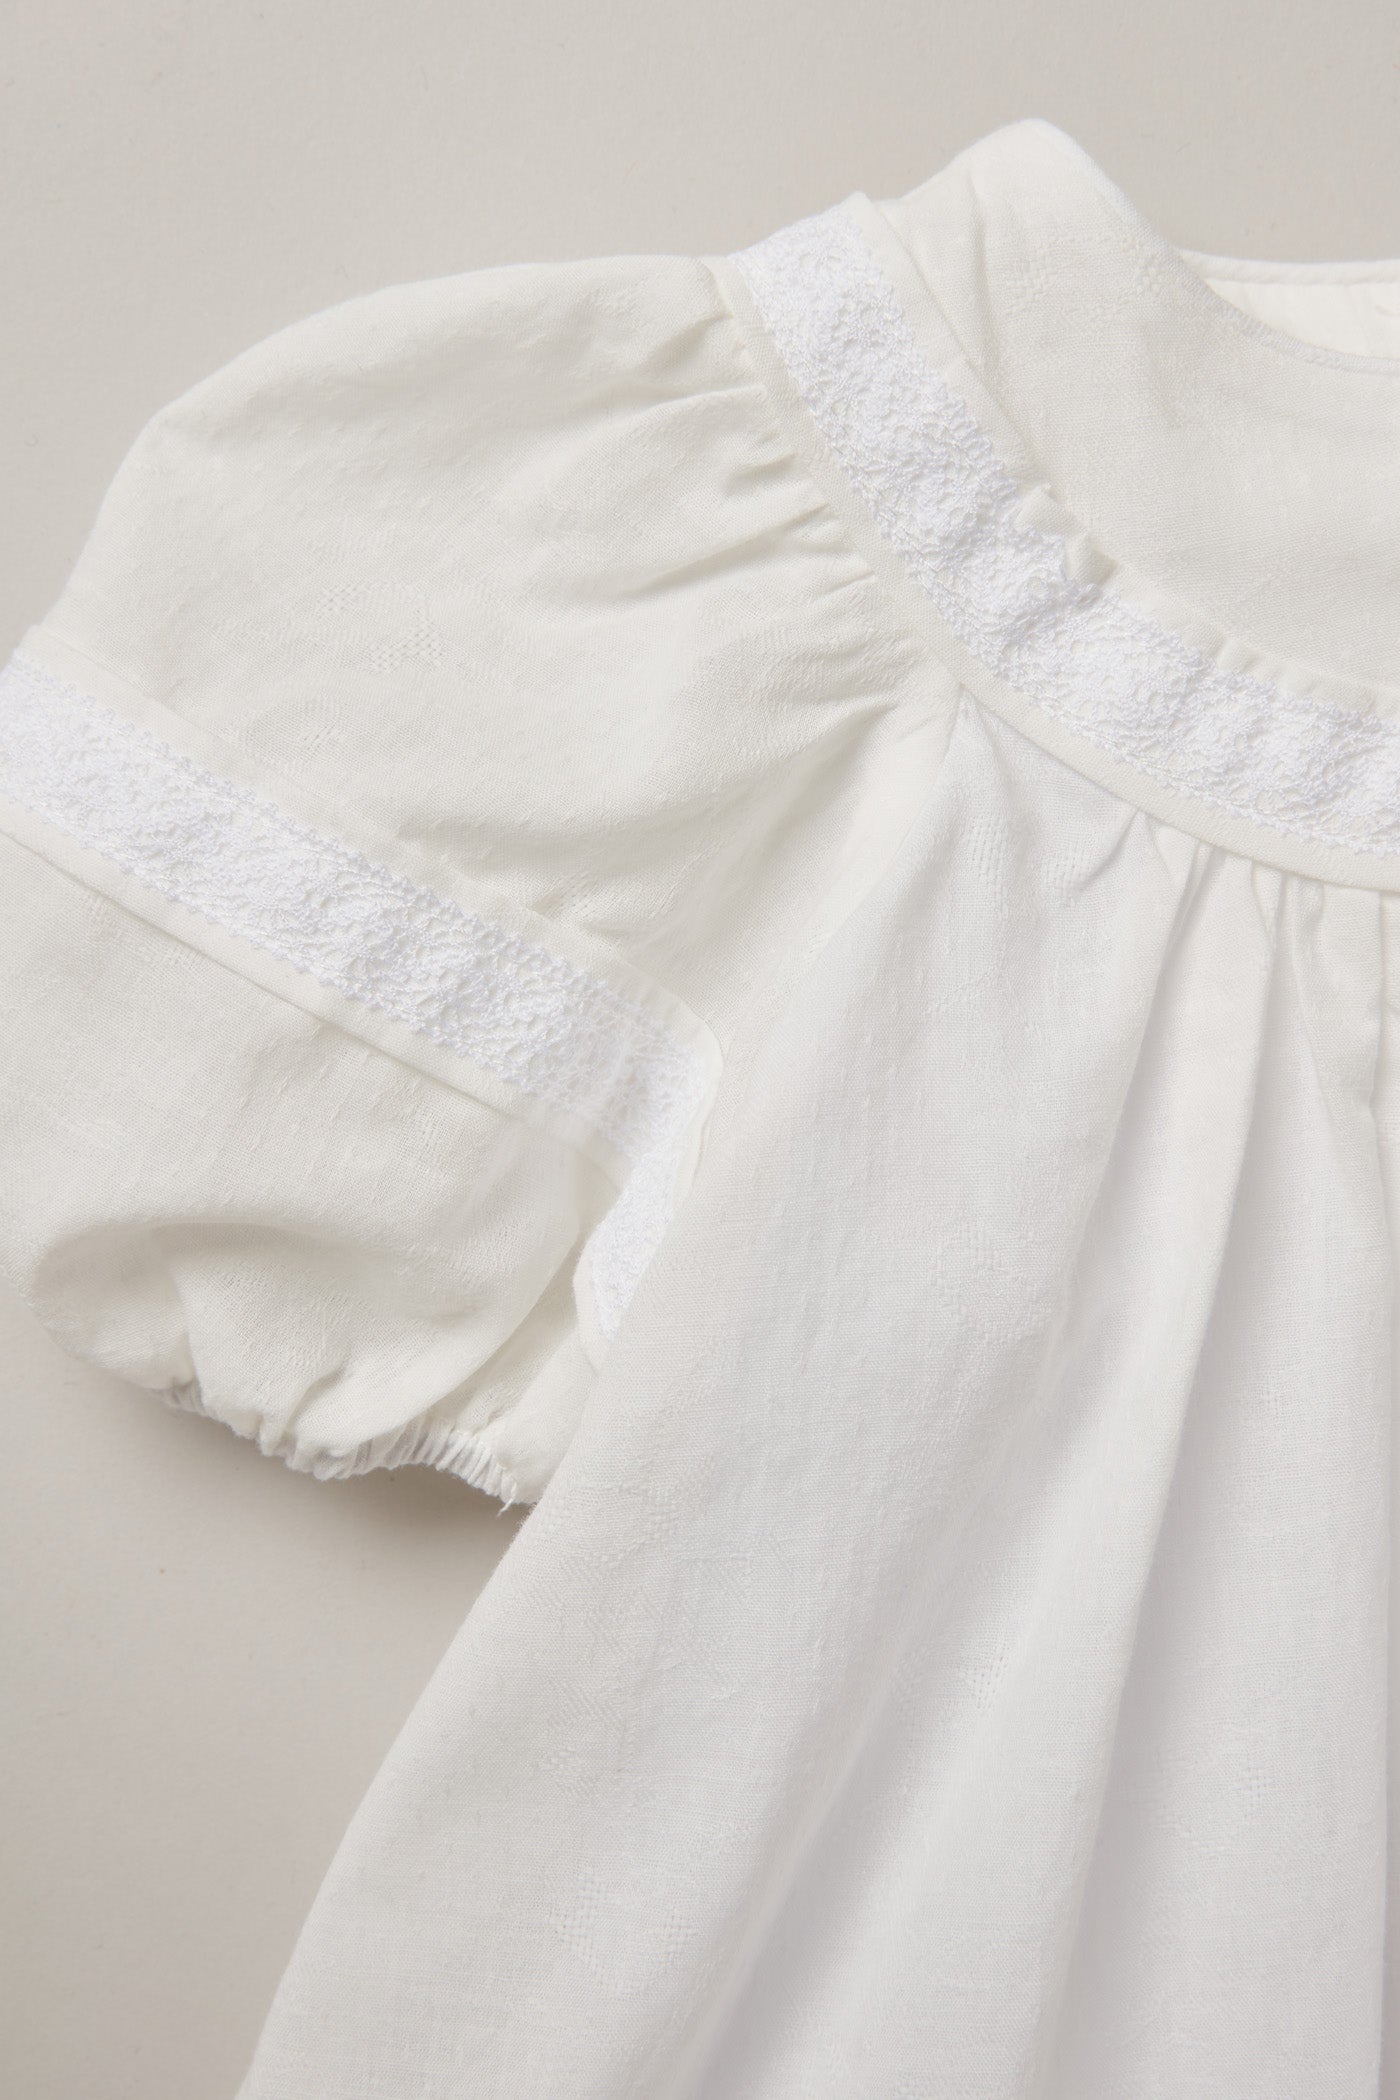 Baby Plumcake Dress in White